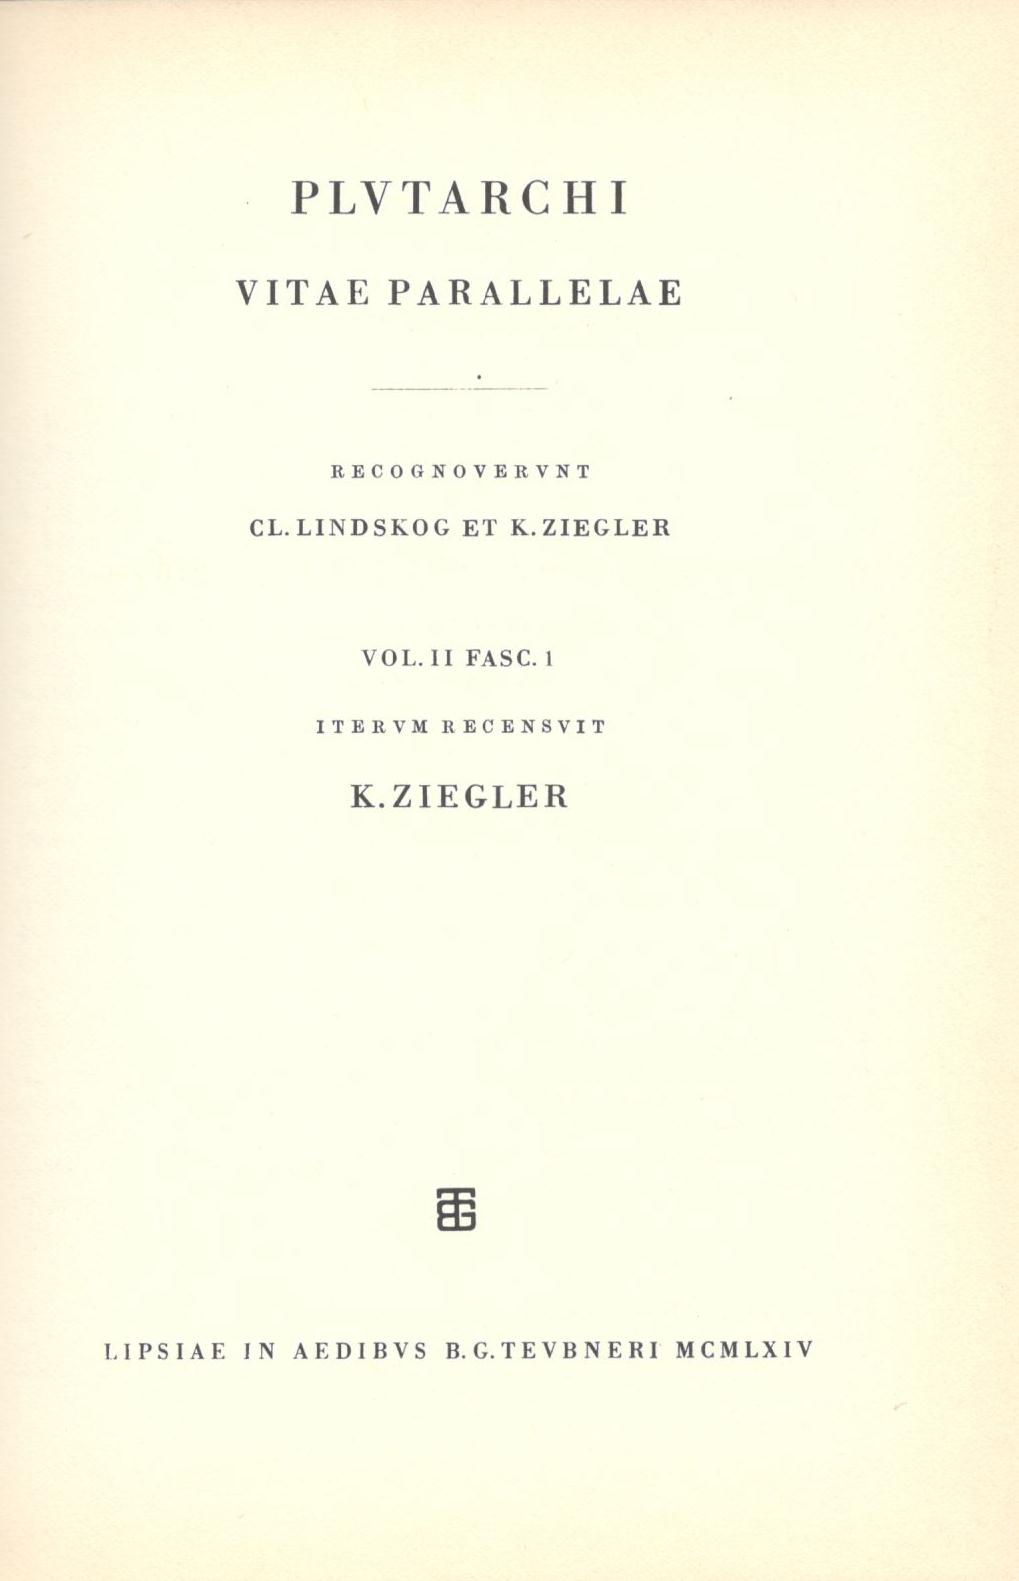 Plutarchi, Vitae Parallelae, Vol. II, (Fasc. 1), [Πλουτάρχου, Βίοι Παράλληλοι, τ. Β